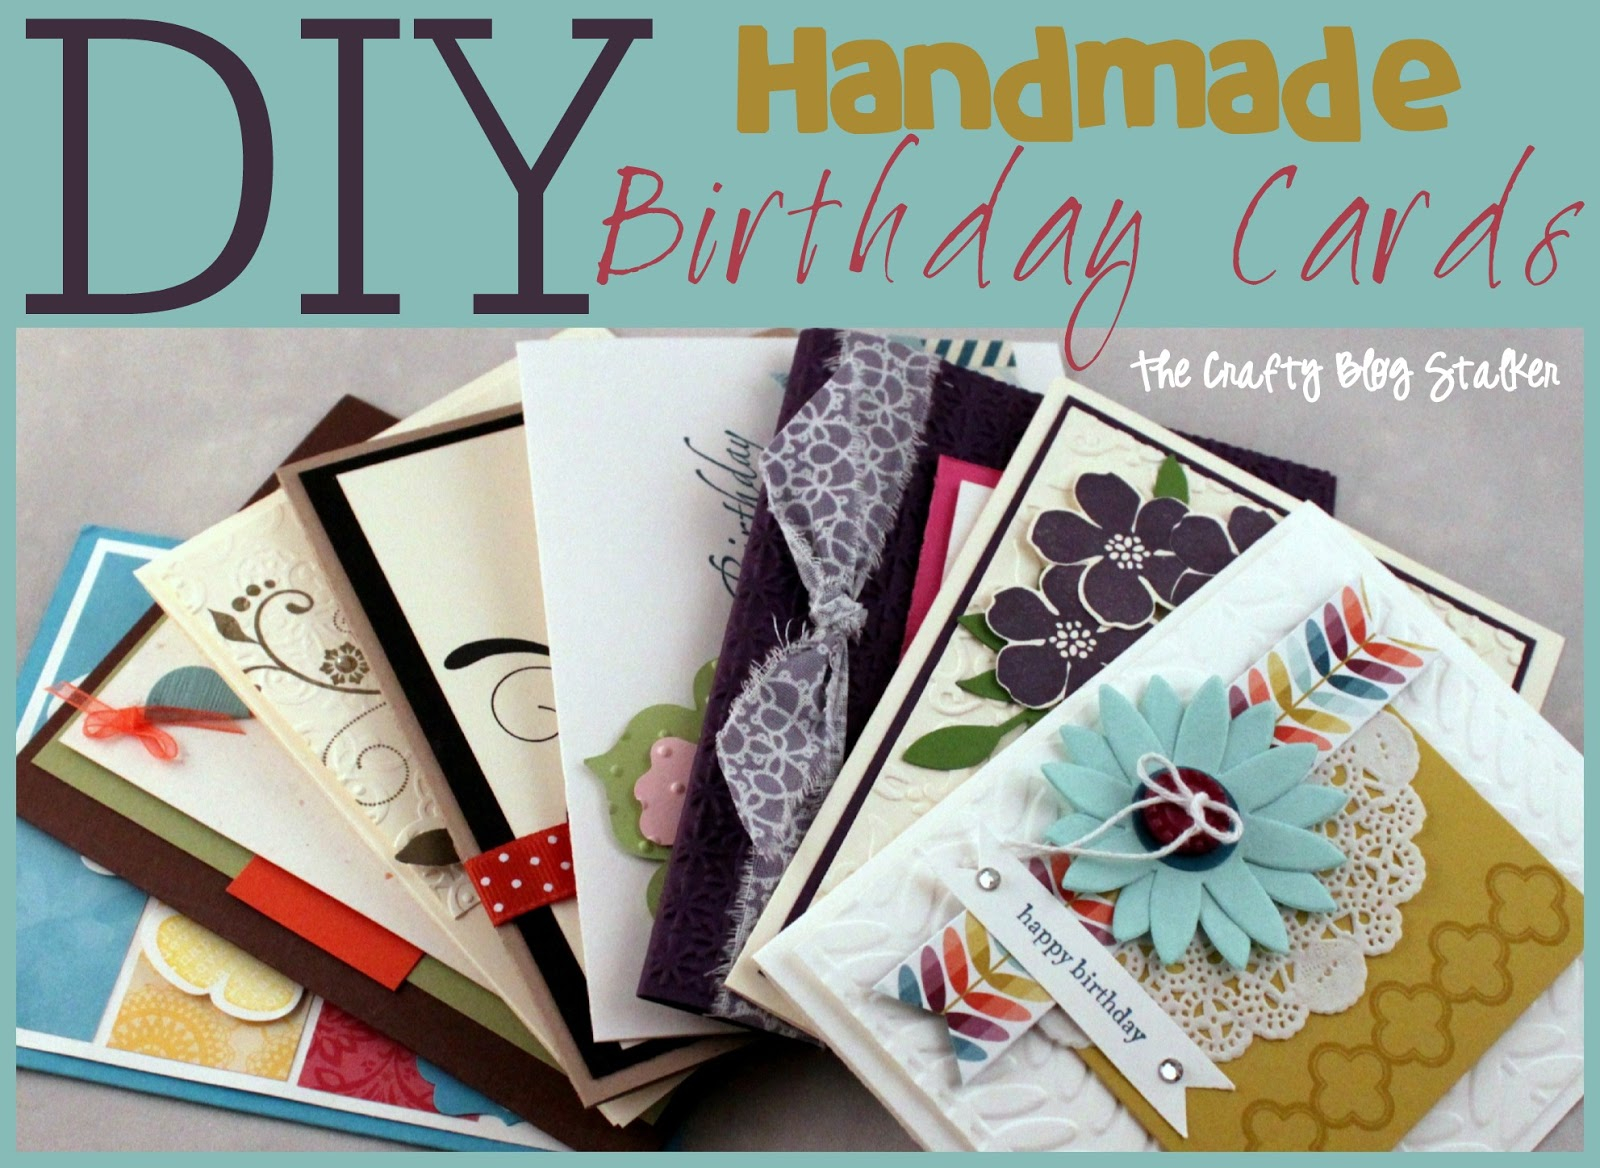 Birthday Card Design Ideas Handmade Birthday Card Ideas The Crafty Blog Stalker